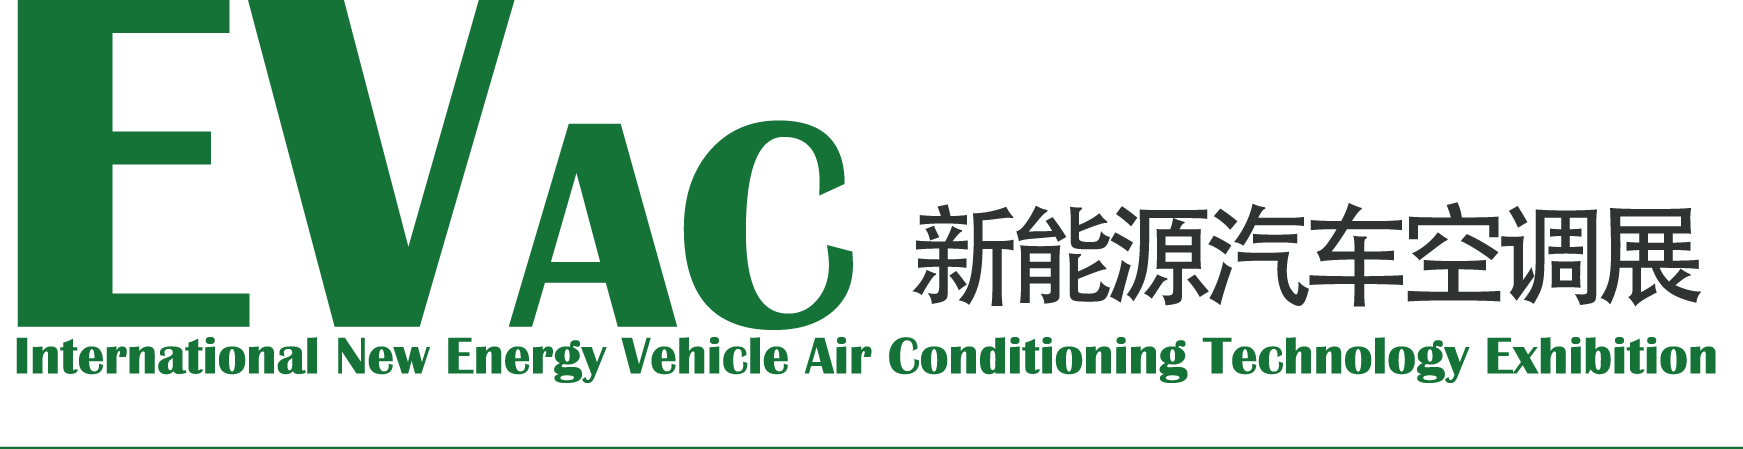 evac2019上海国际新能源汽车空调及压缩机展览会 